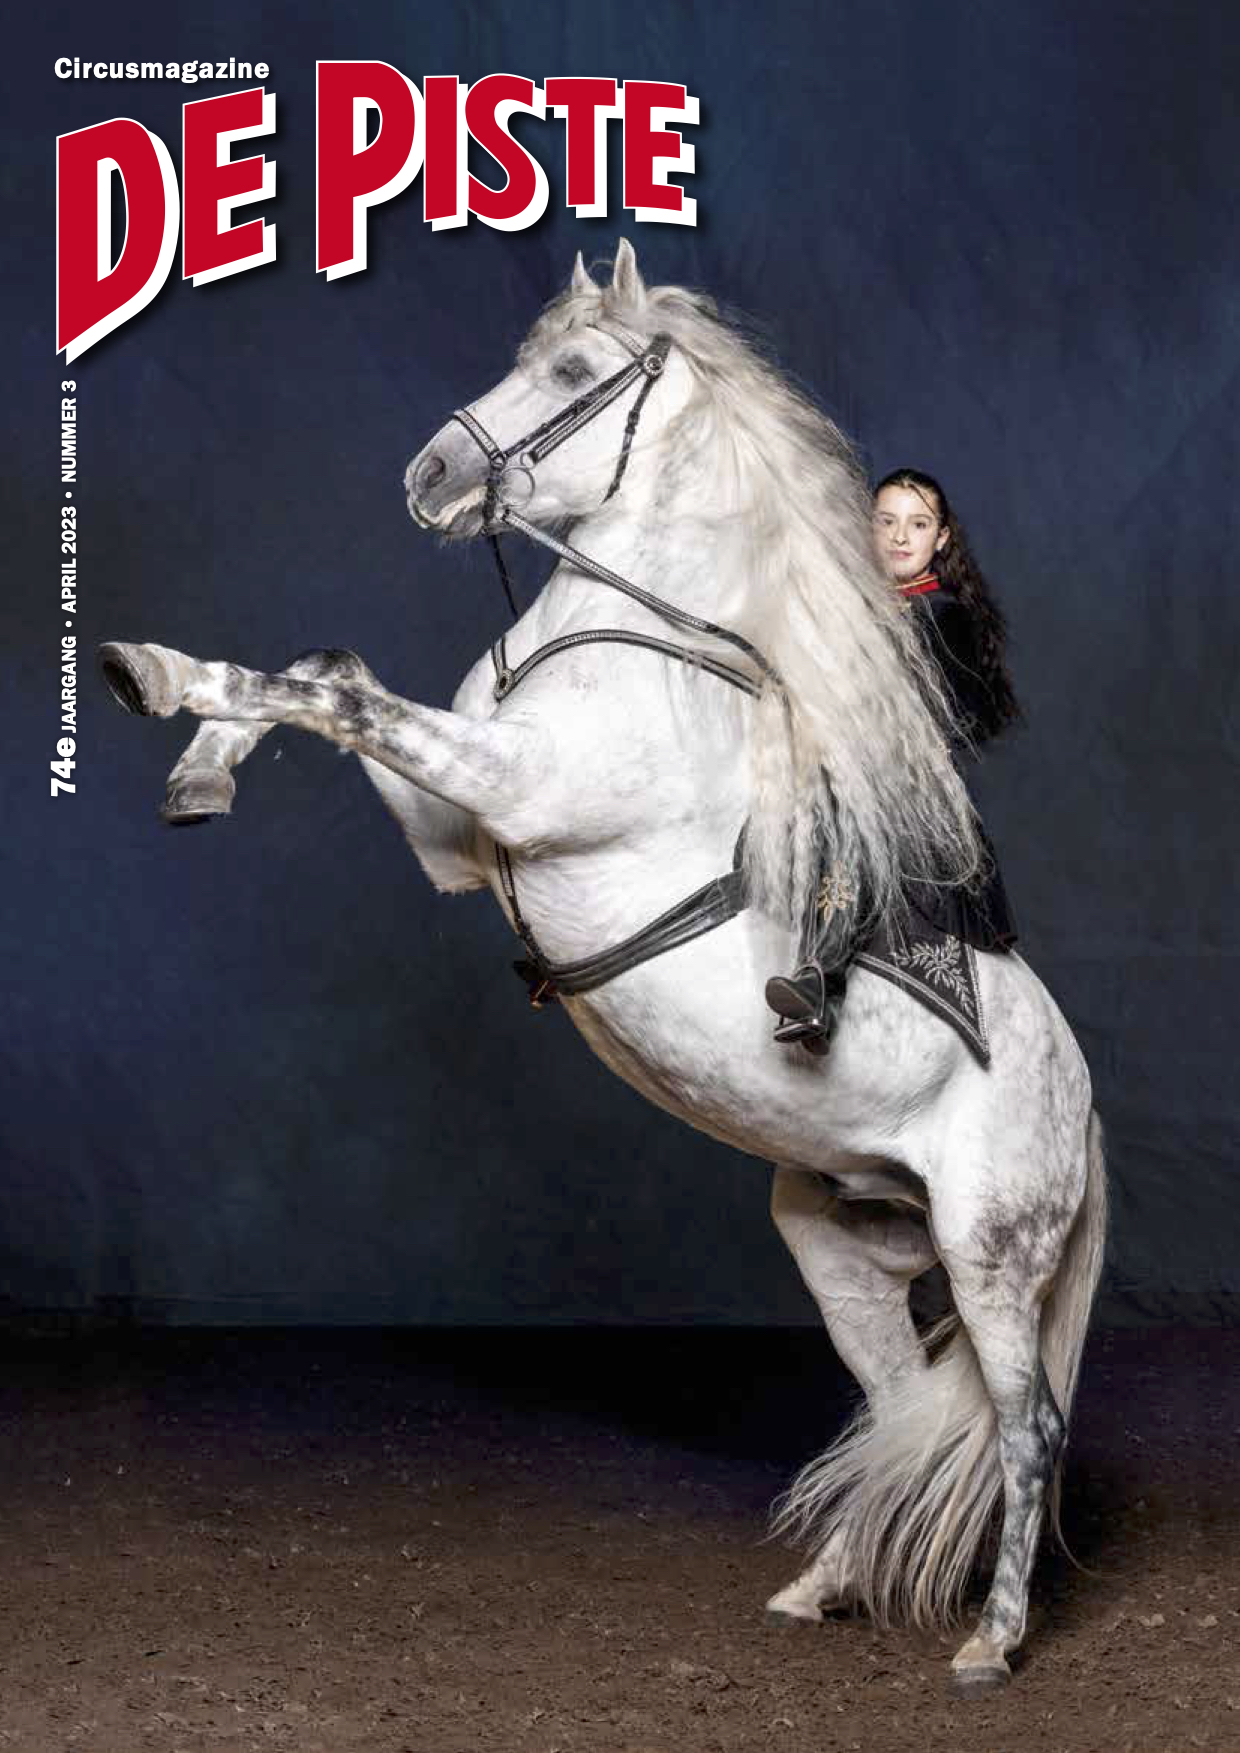 April-nummer Circusmagazine De Piste is er!